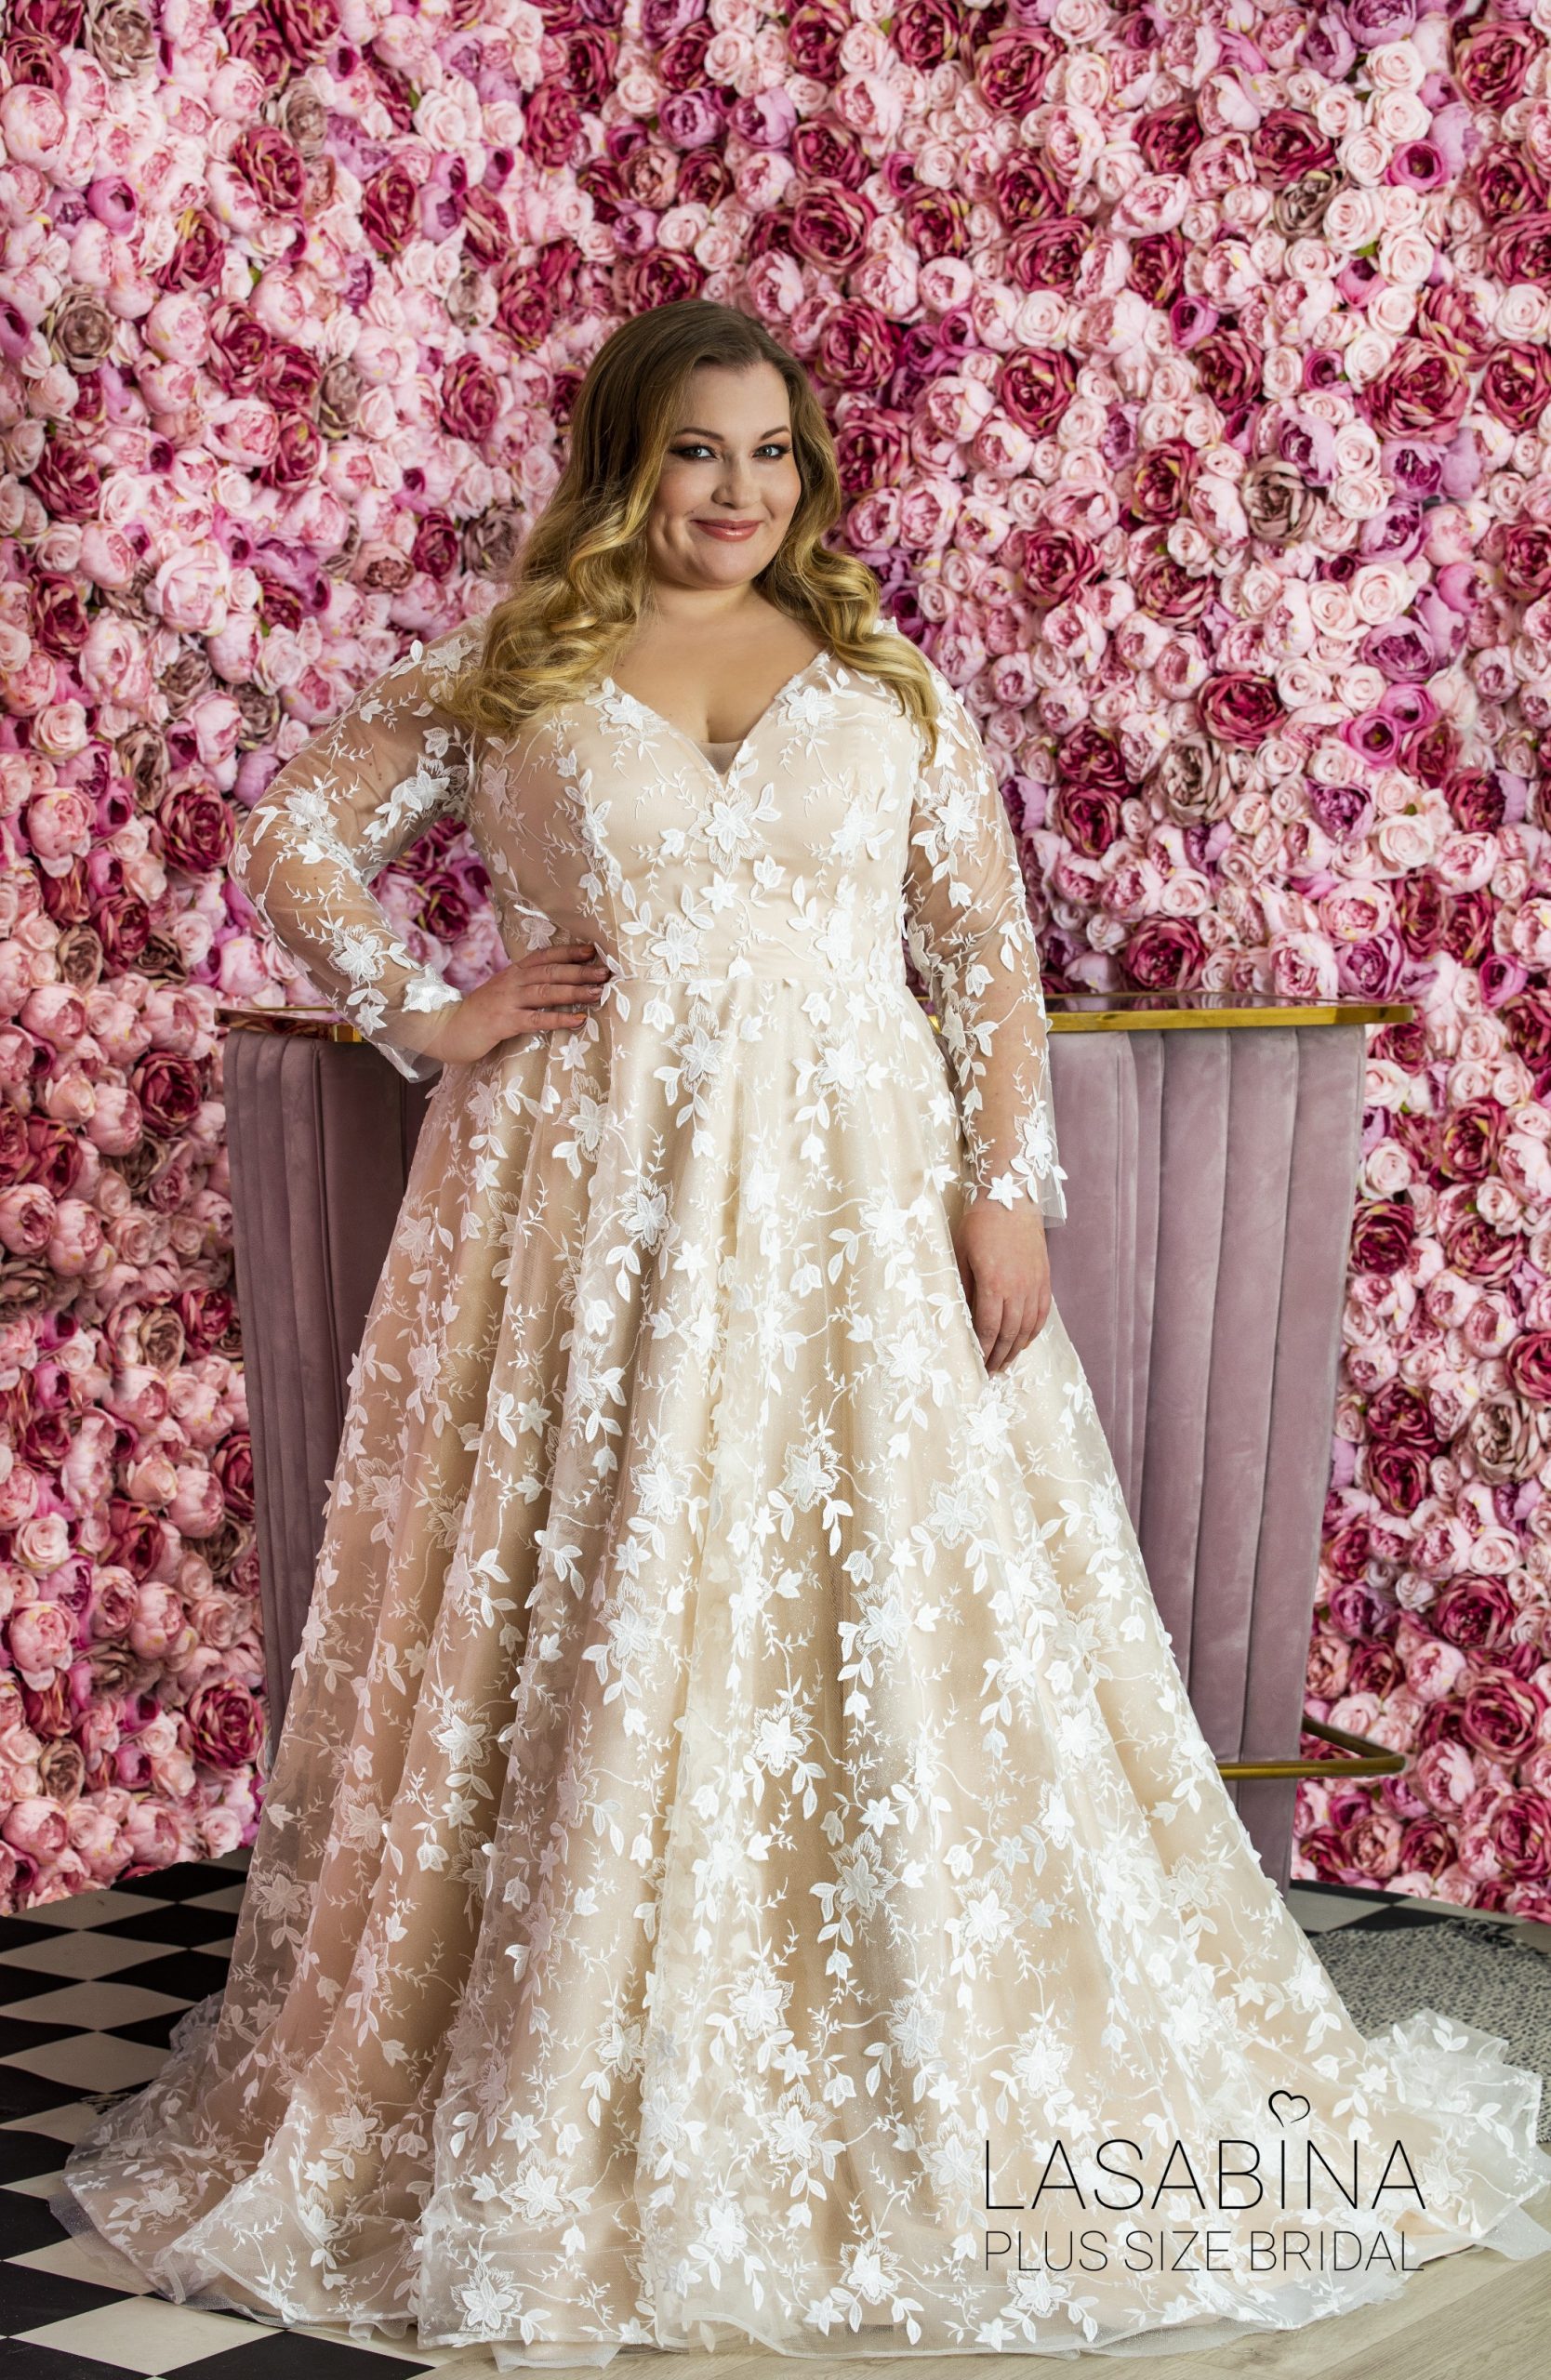 CHLOE plus size wedding dress - LASABINA Plus Size Bridal